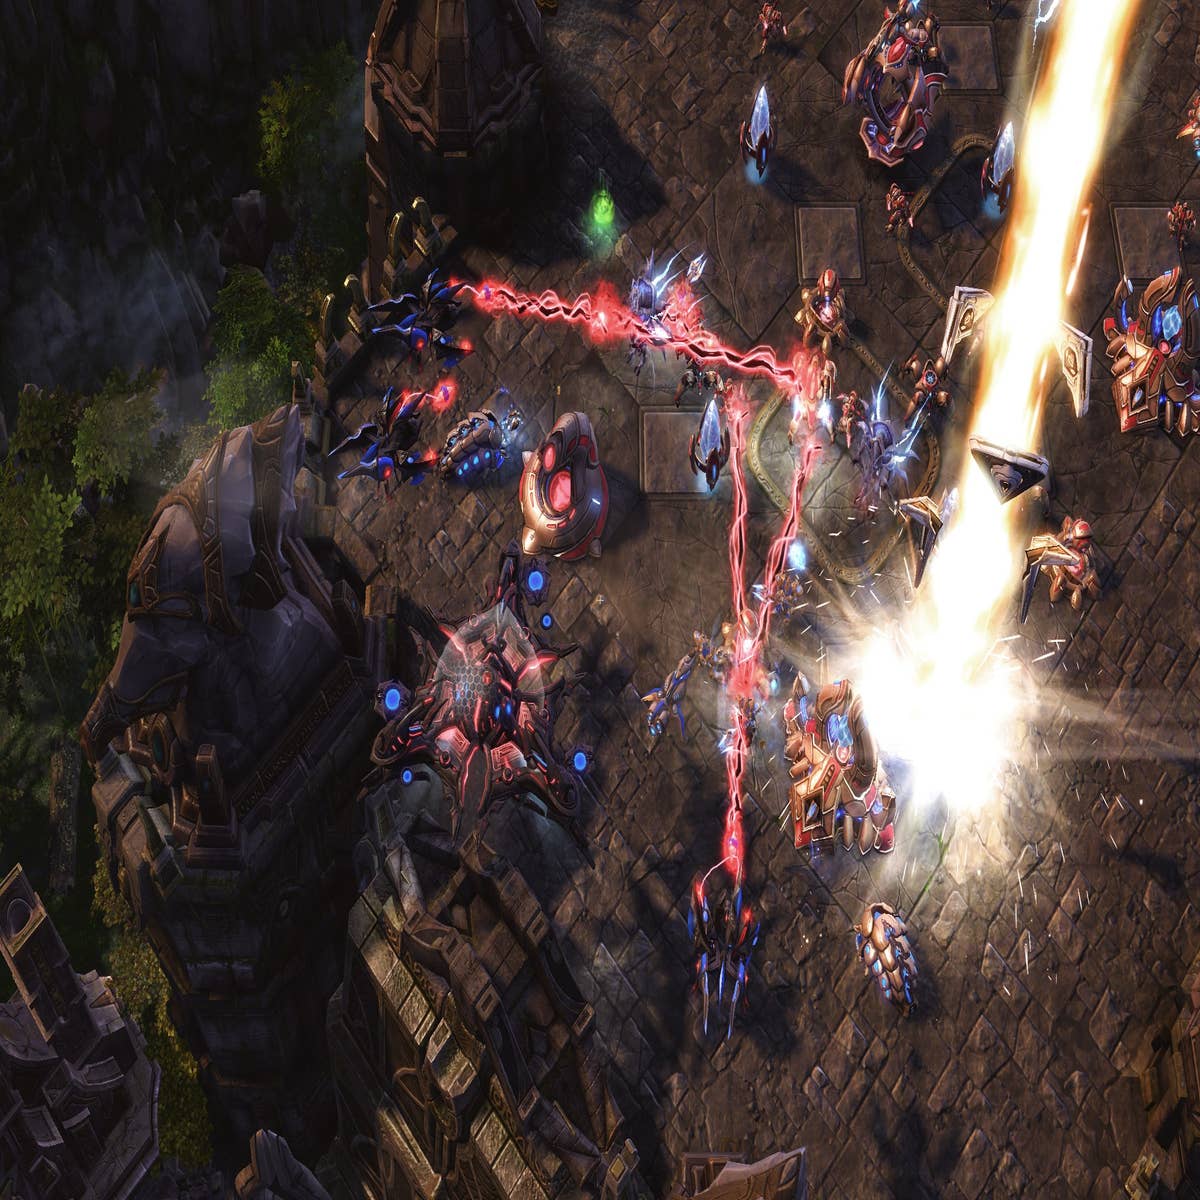 Diablo 4 and Battlenet games suffer Blizzard DDoS attack